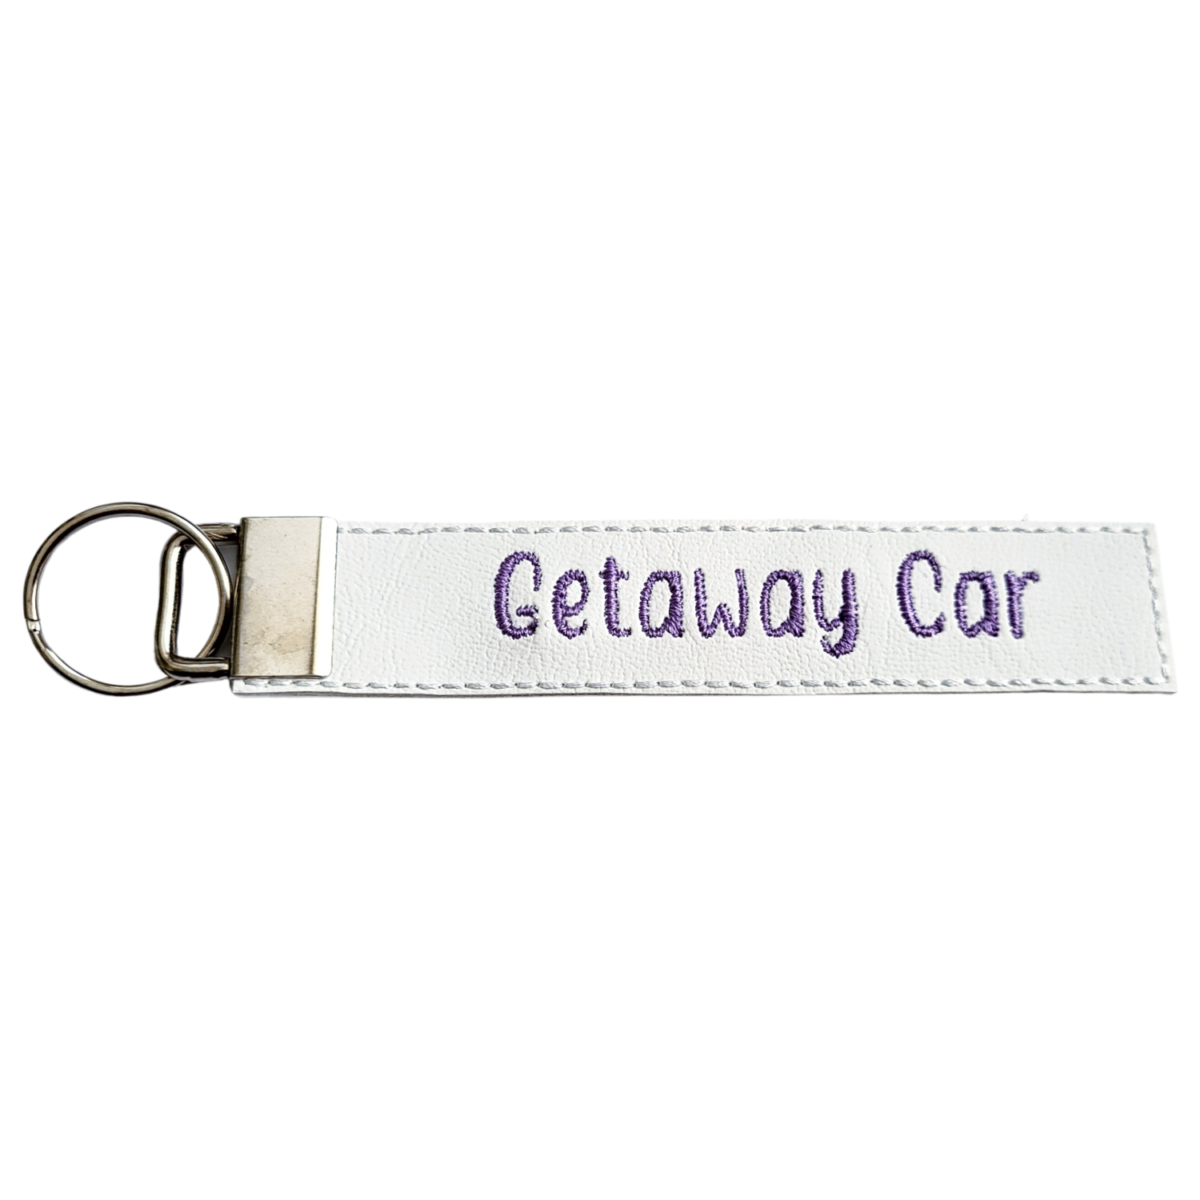 Got Beauty Getaway Car Keychain